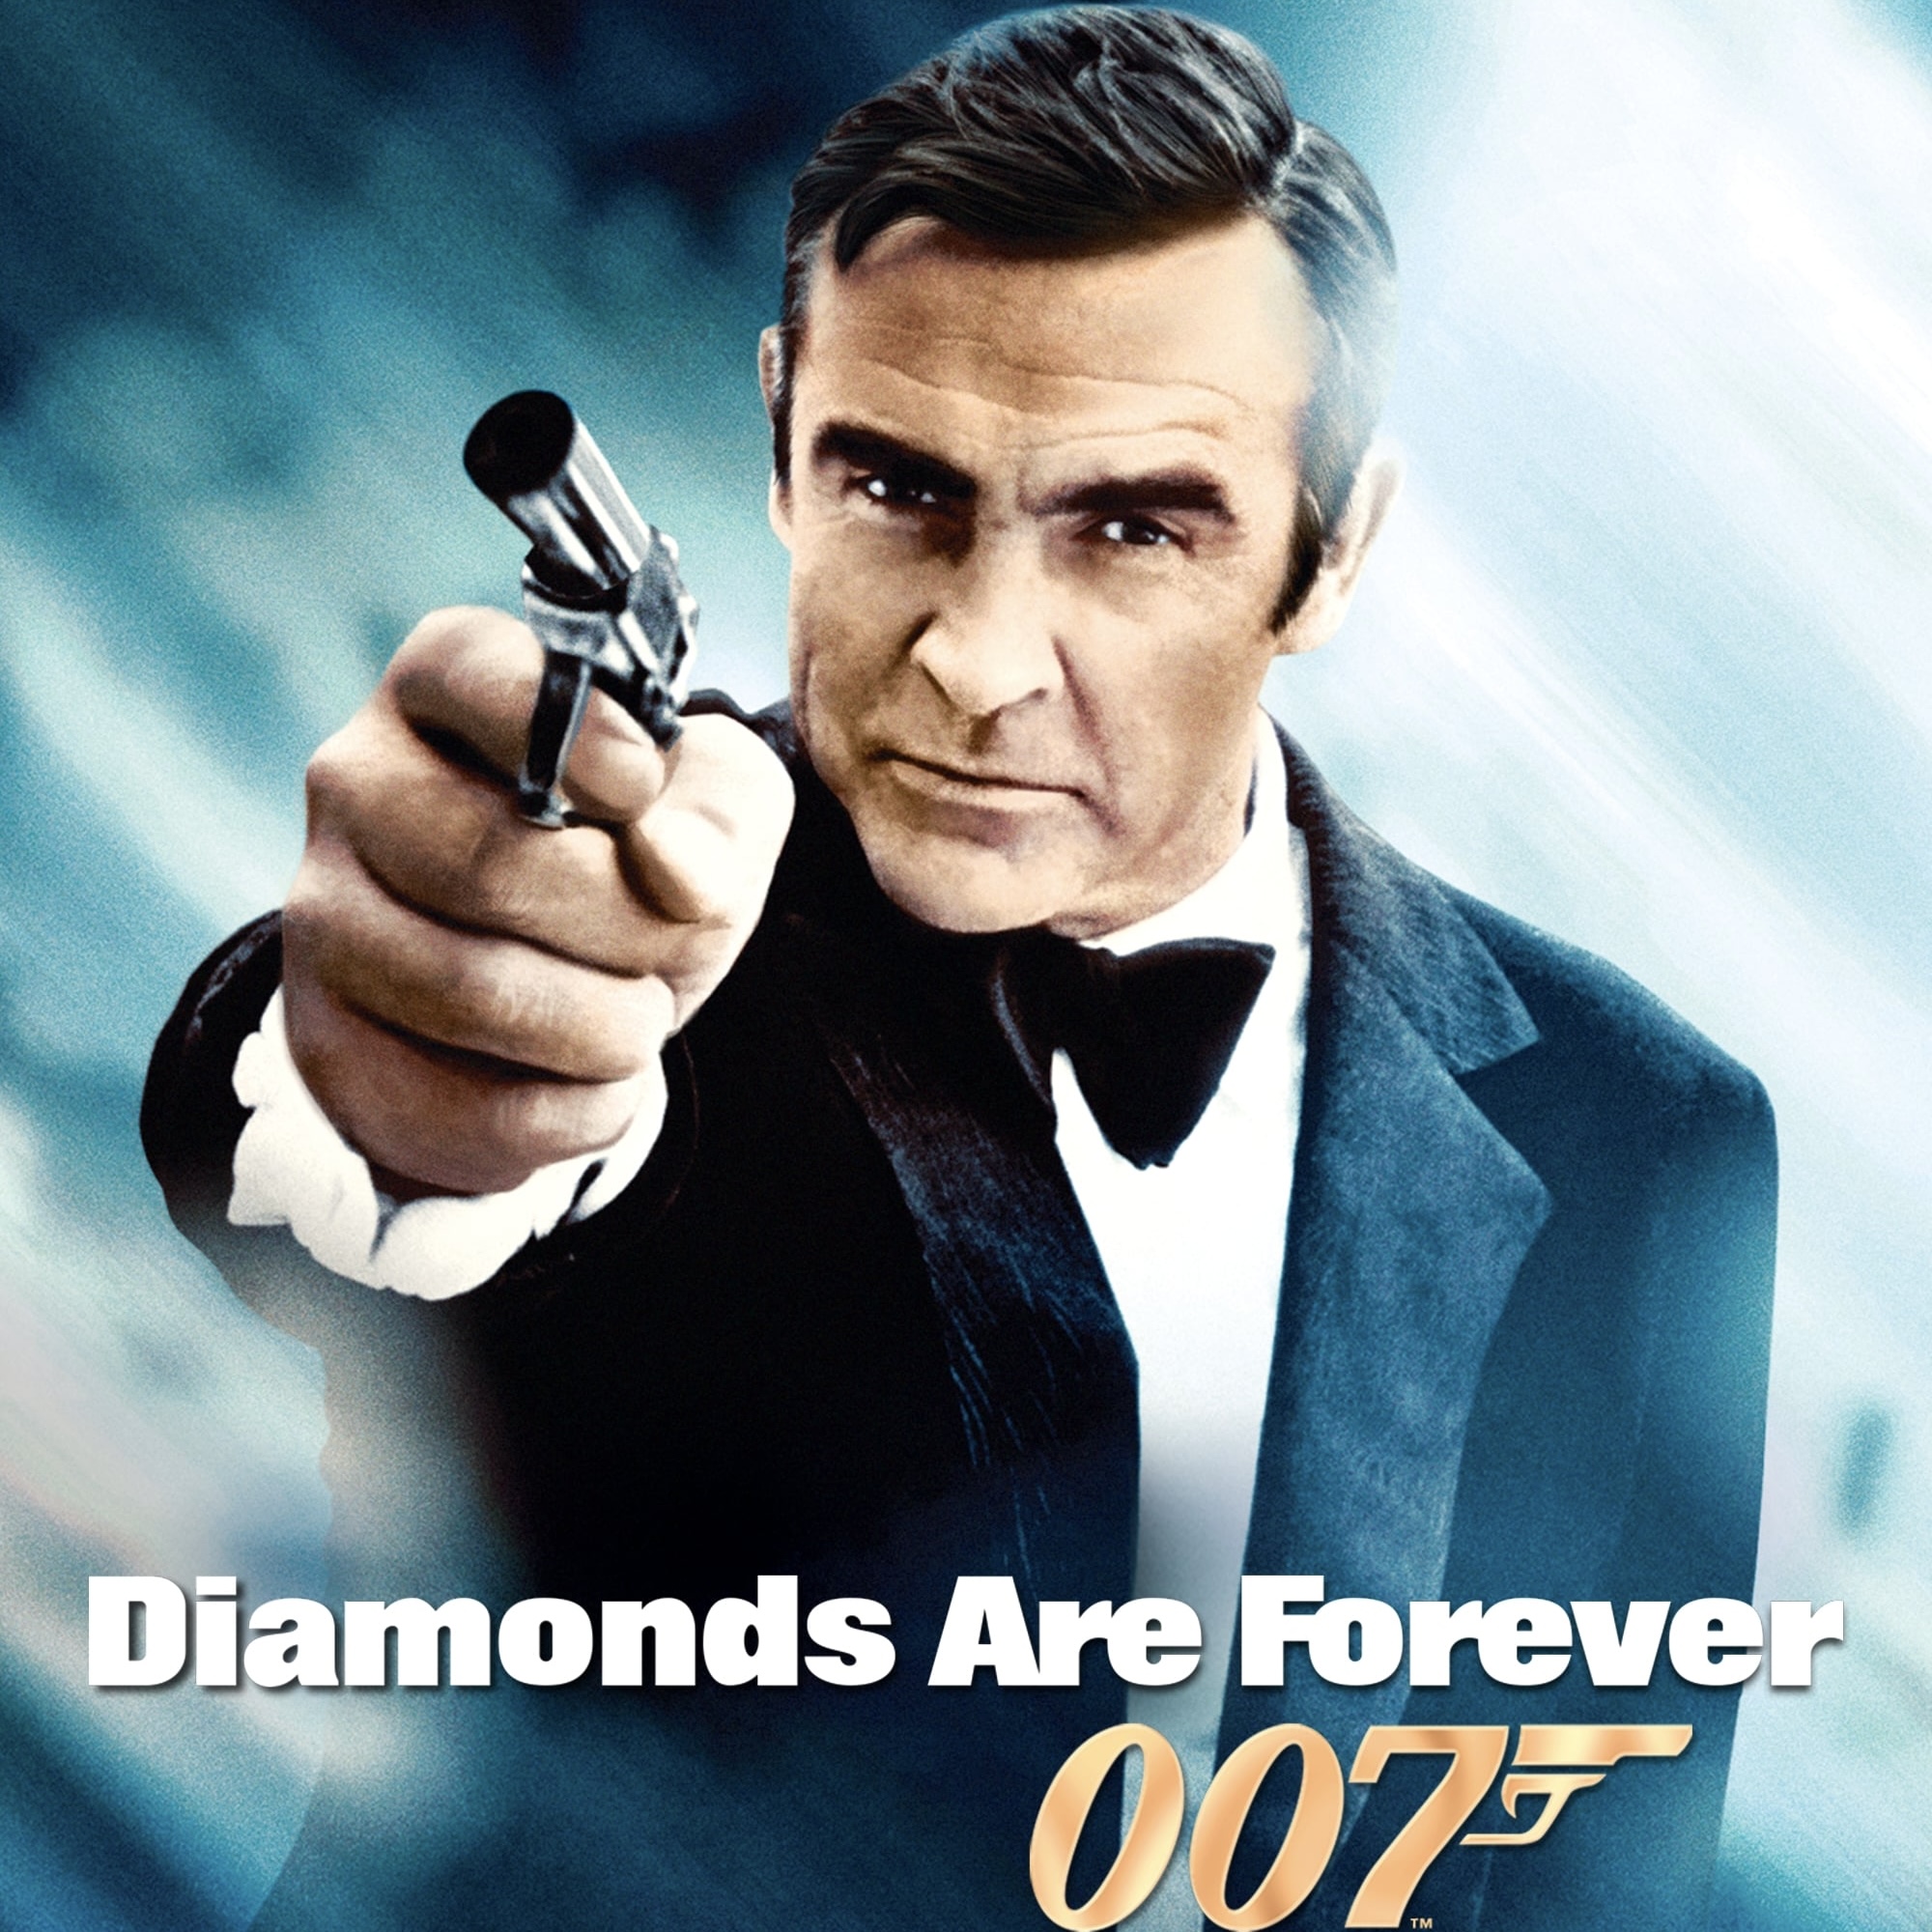 Bond Movies In Order